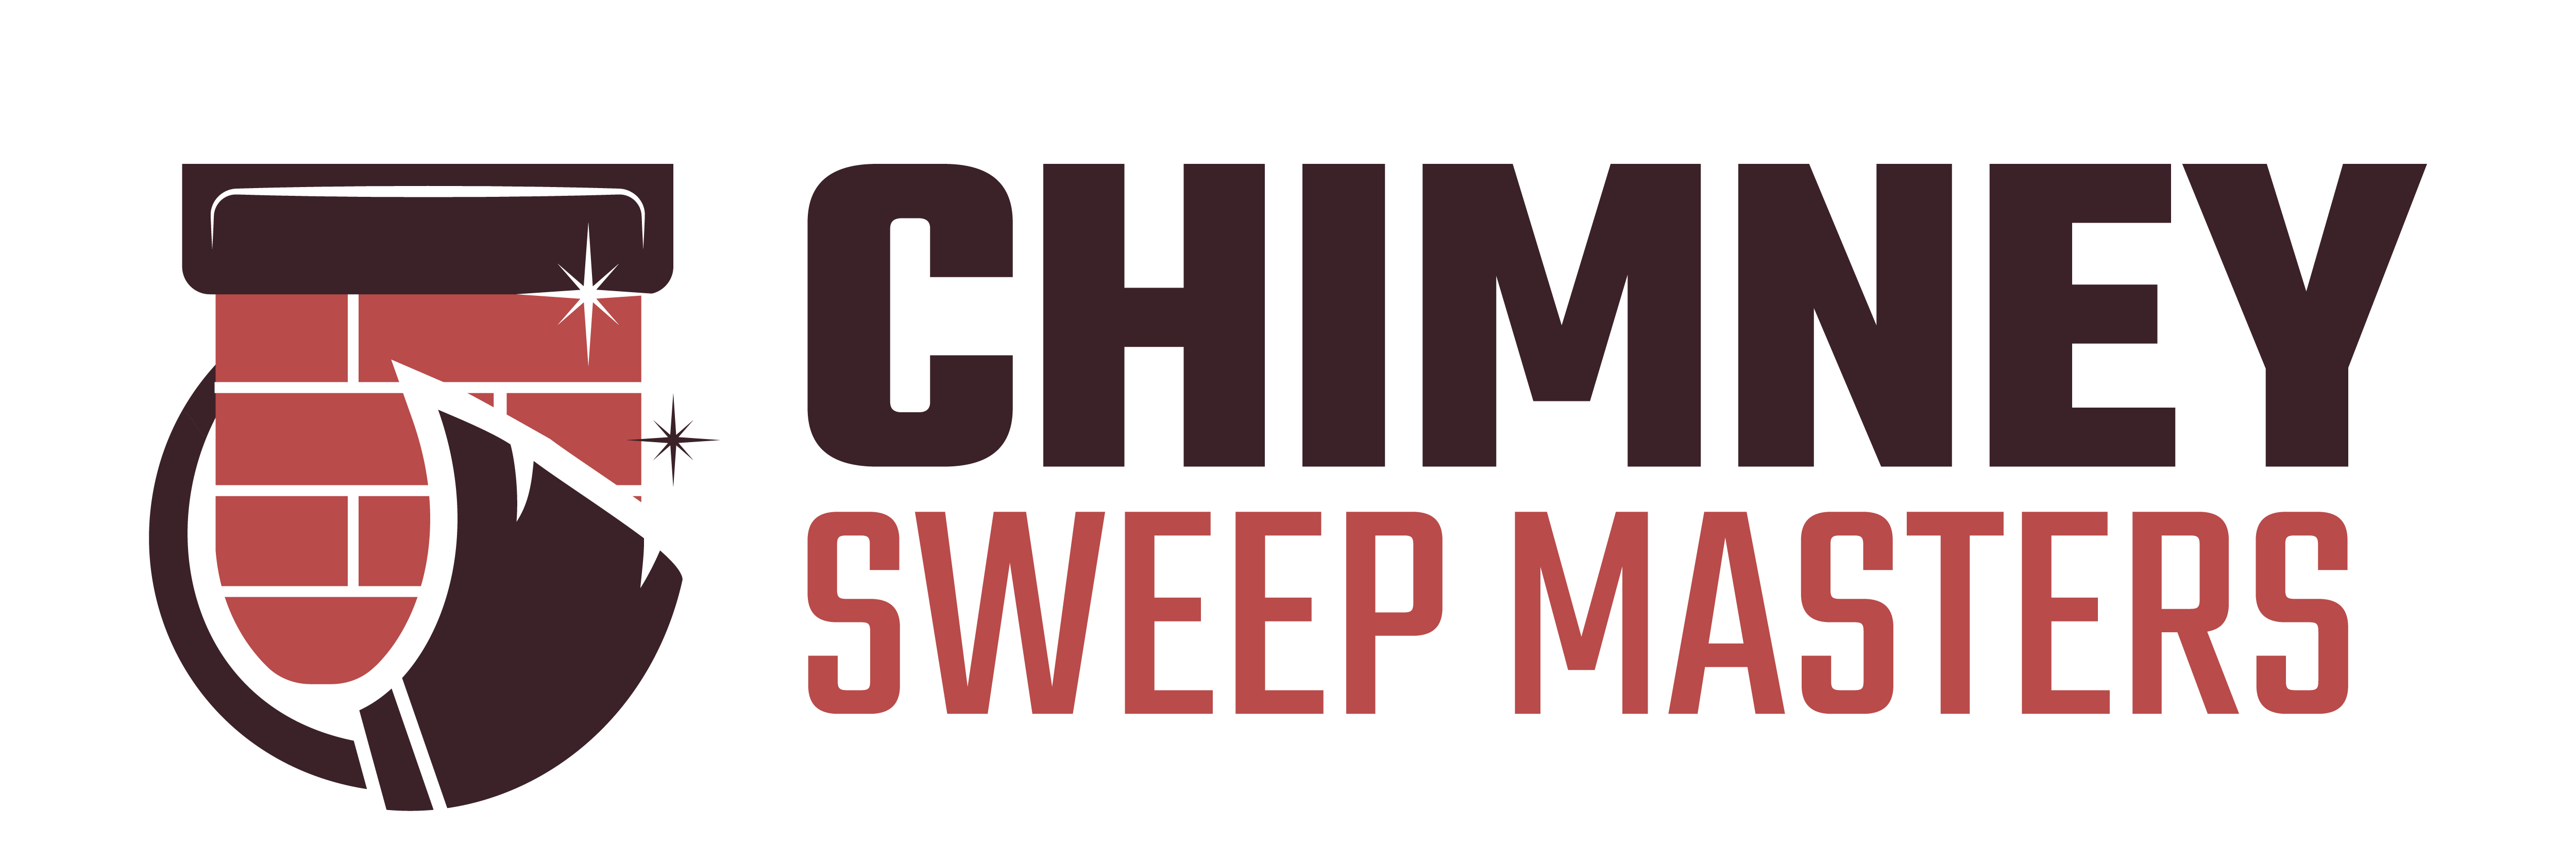 Chimney Sweep Masters West Carson Logo